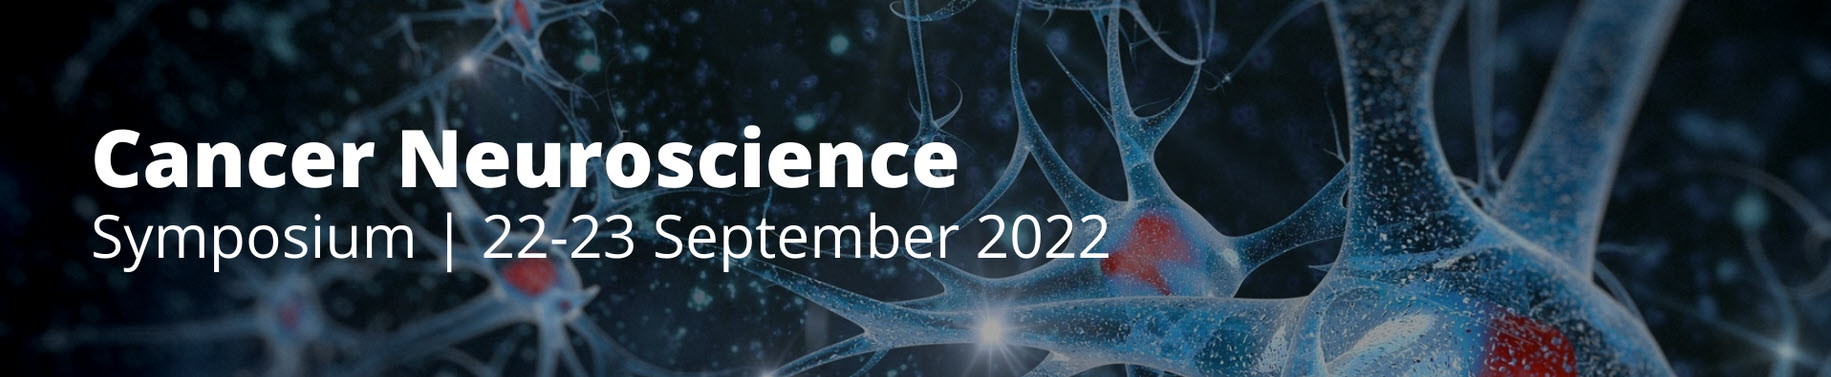 Cancer Neuroscience Symposium Banner